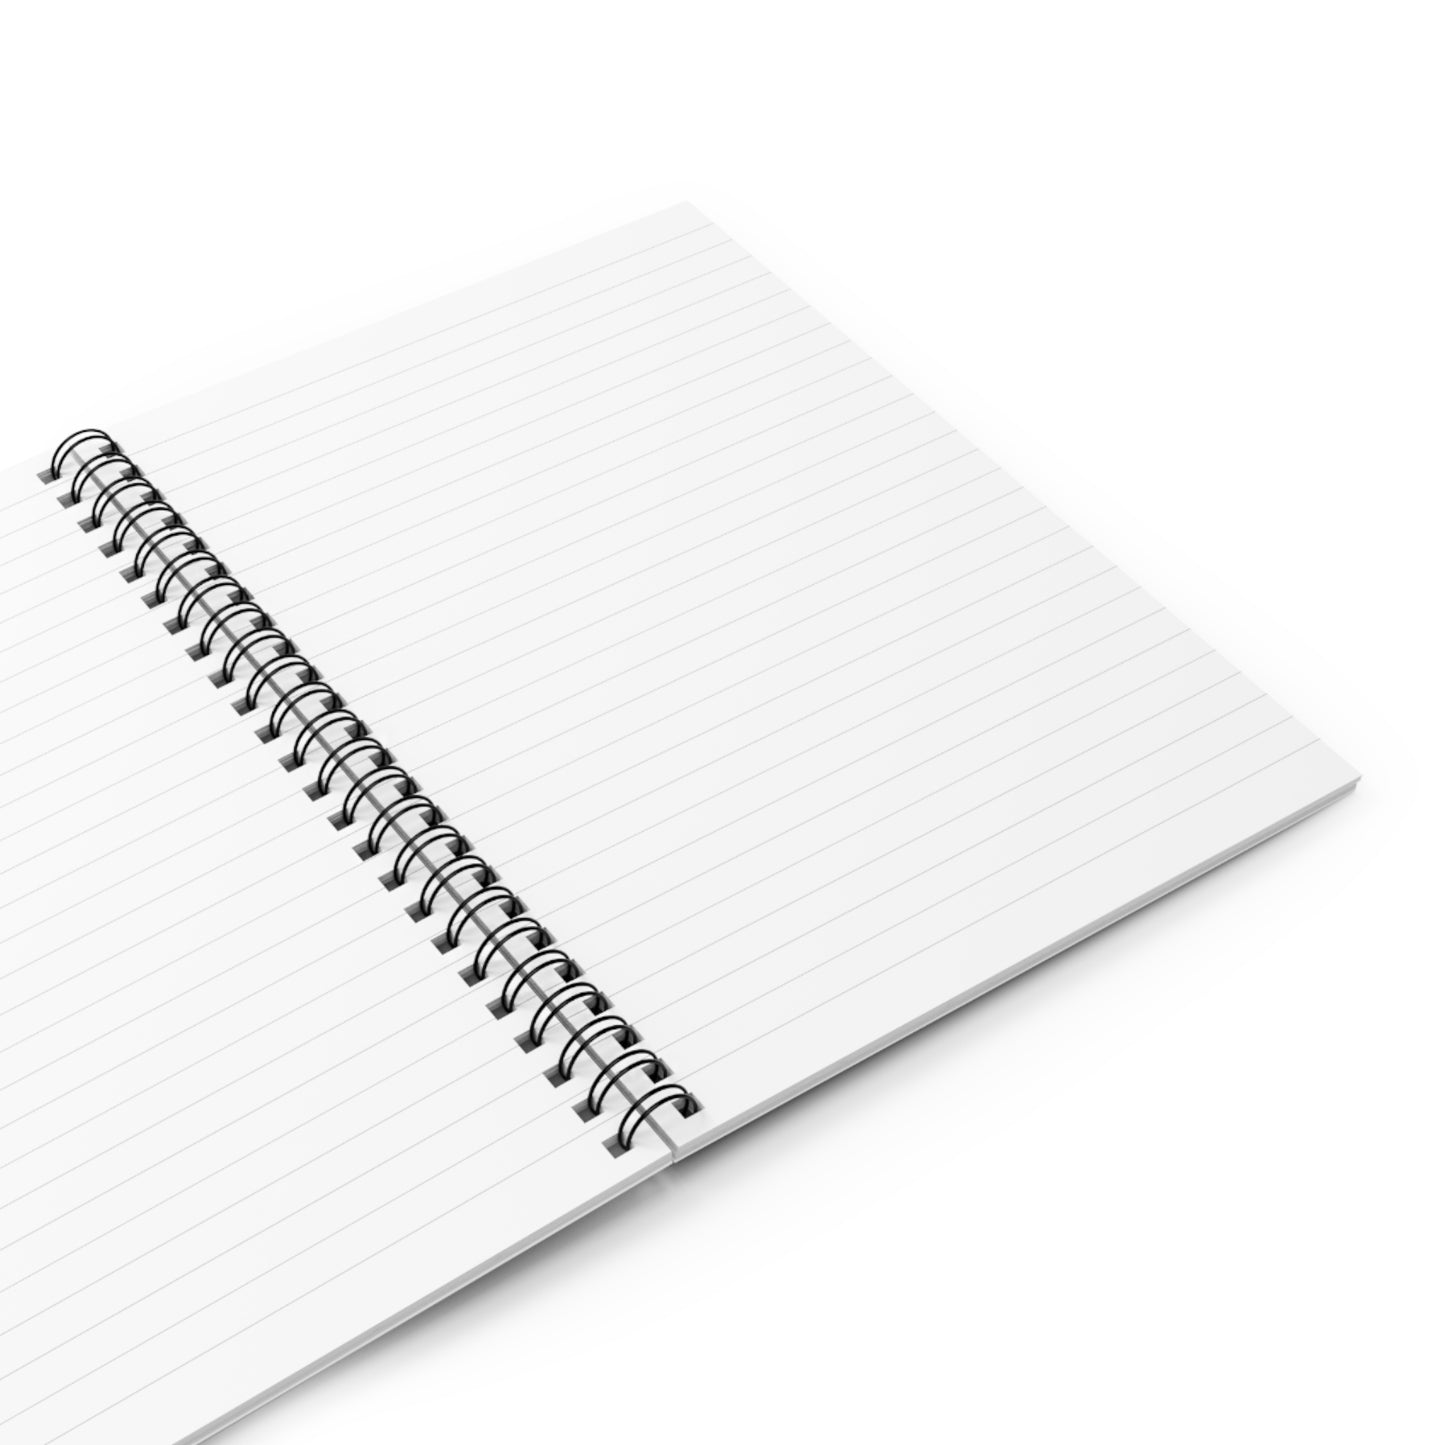 Spiral Notebook - Ruled Line, mental health